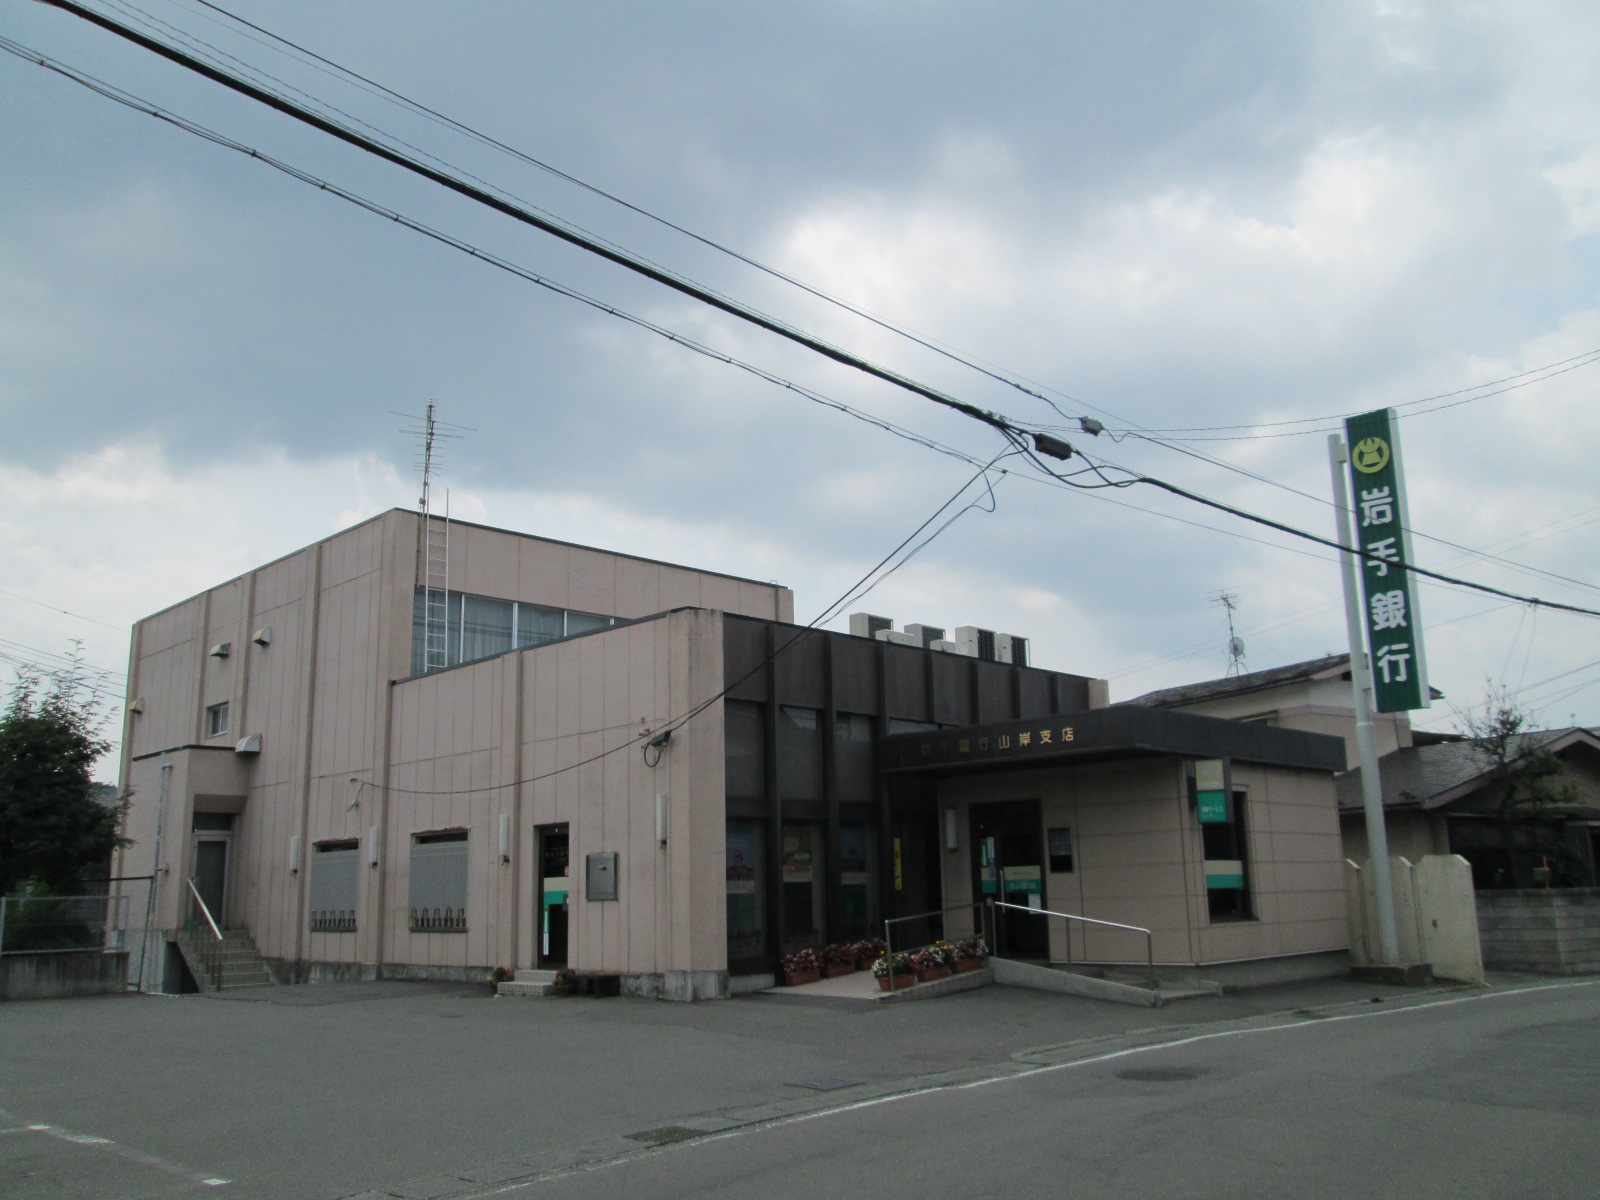 Bank. 1022m to Iwate Yamagishi Branch (Bank)